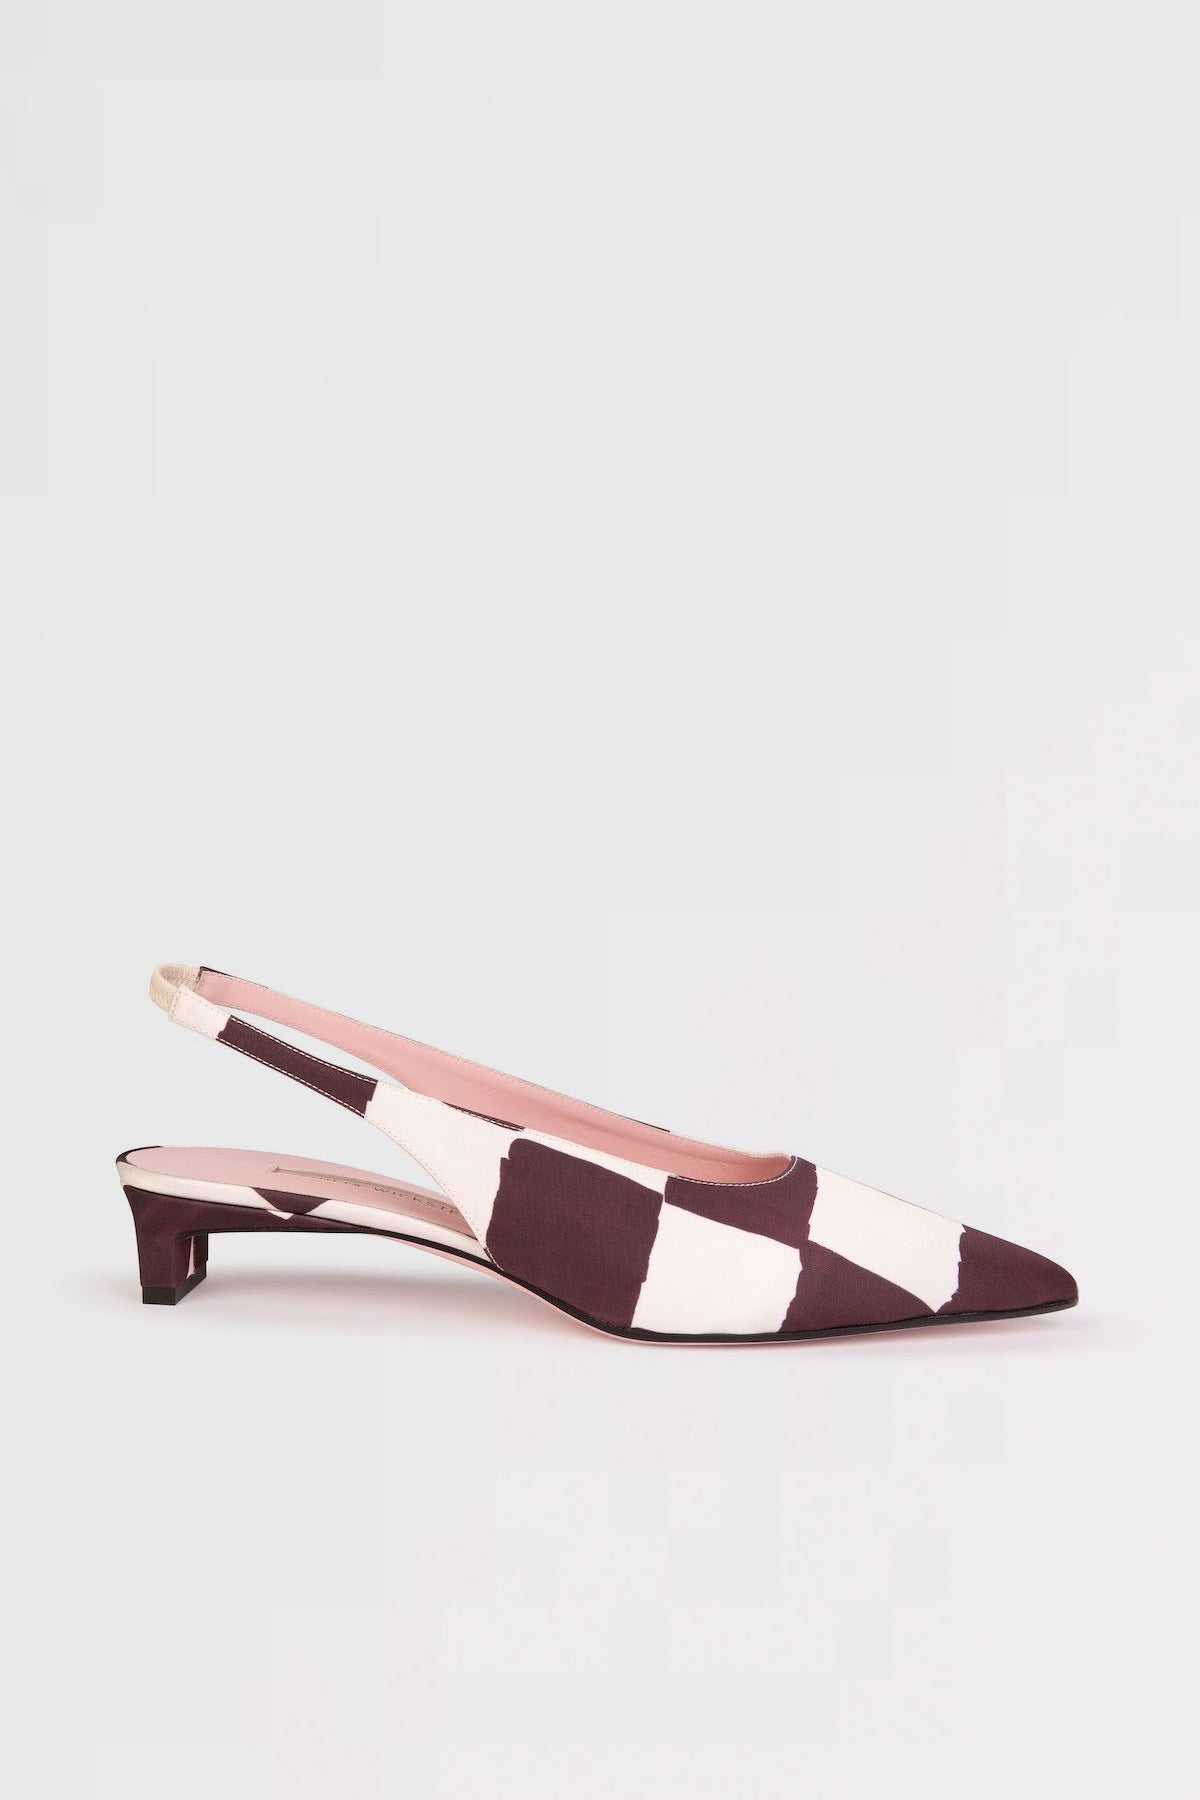 Margarita Kitten Heels | Chocolate Checkerboard Sling-Back Kitten Heel Shoes | Emilia Wickstead